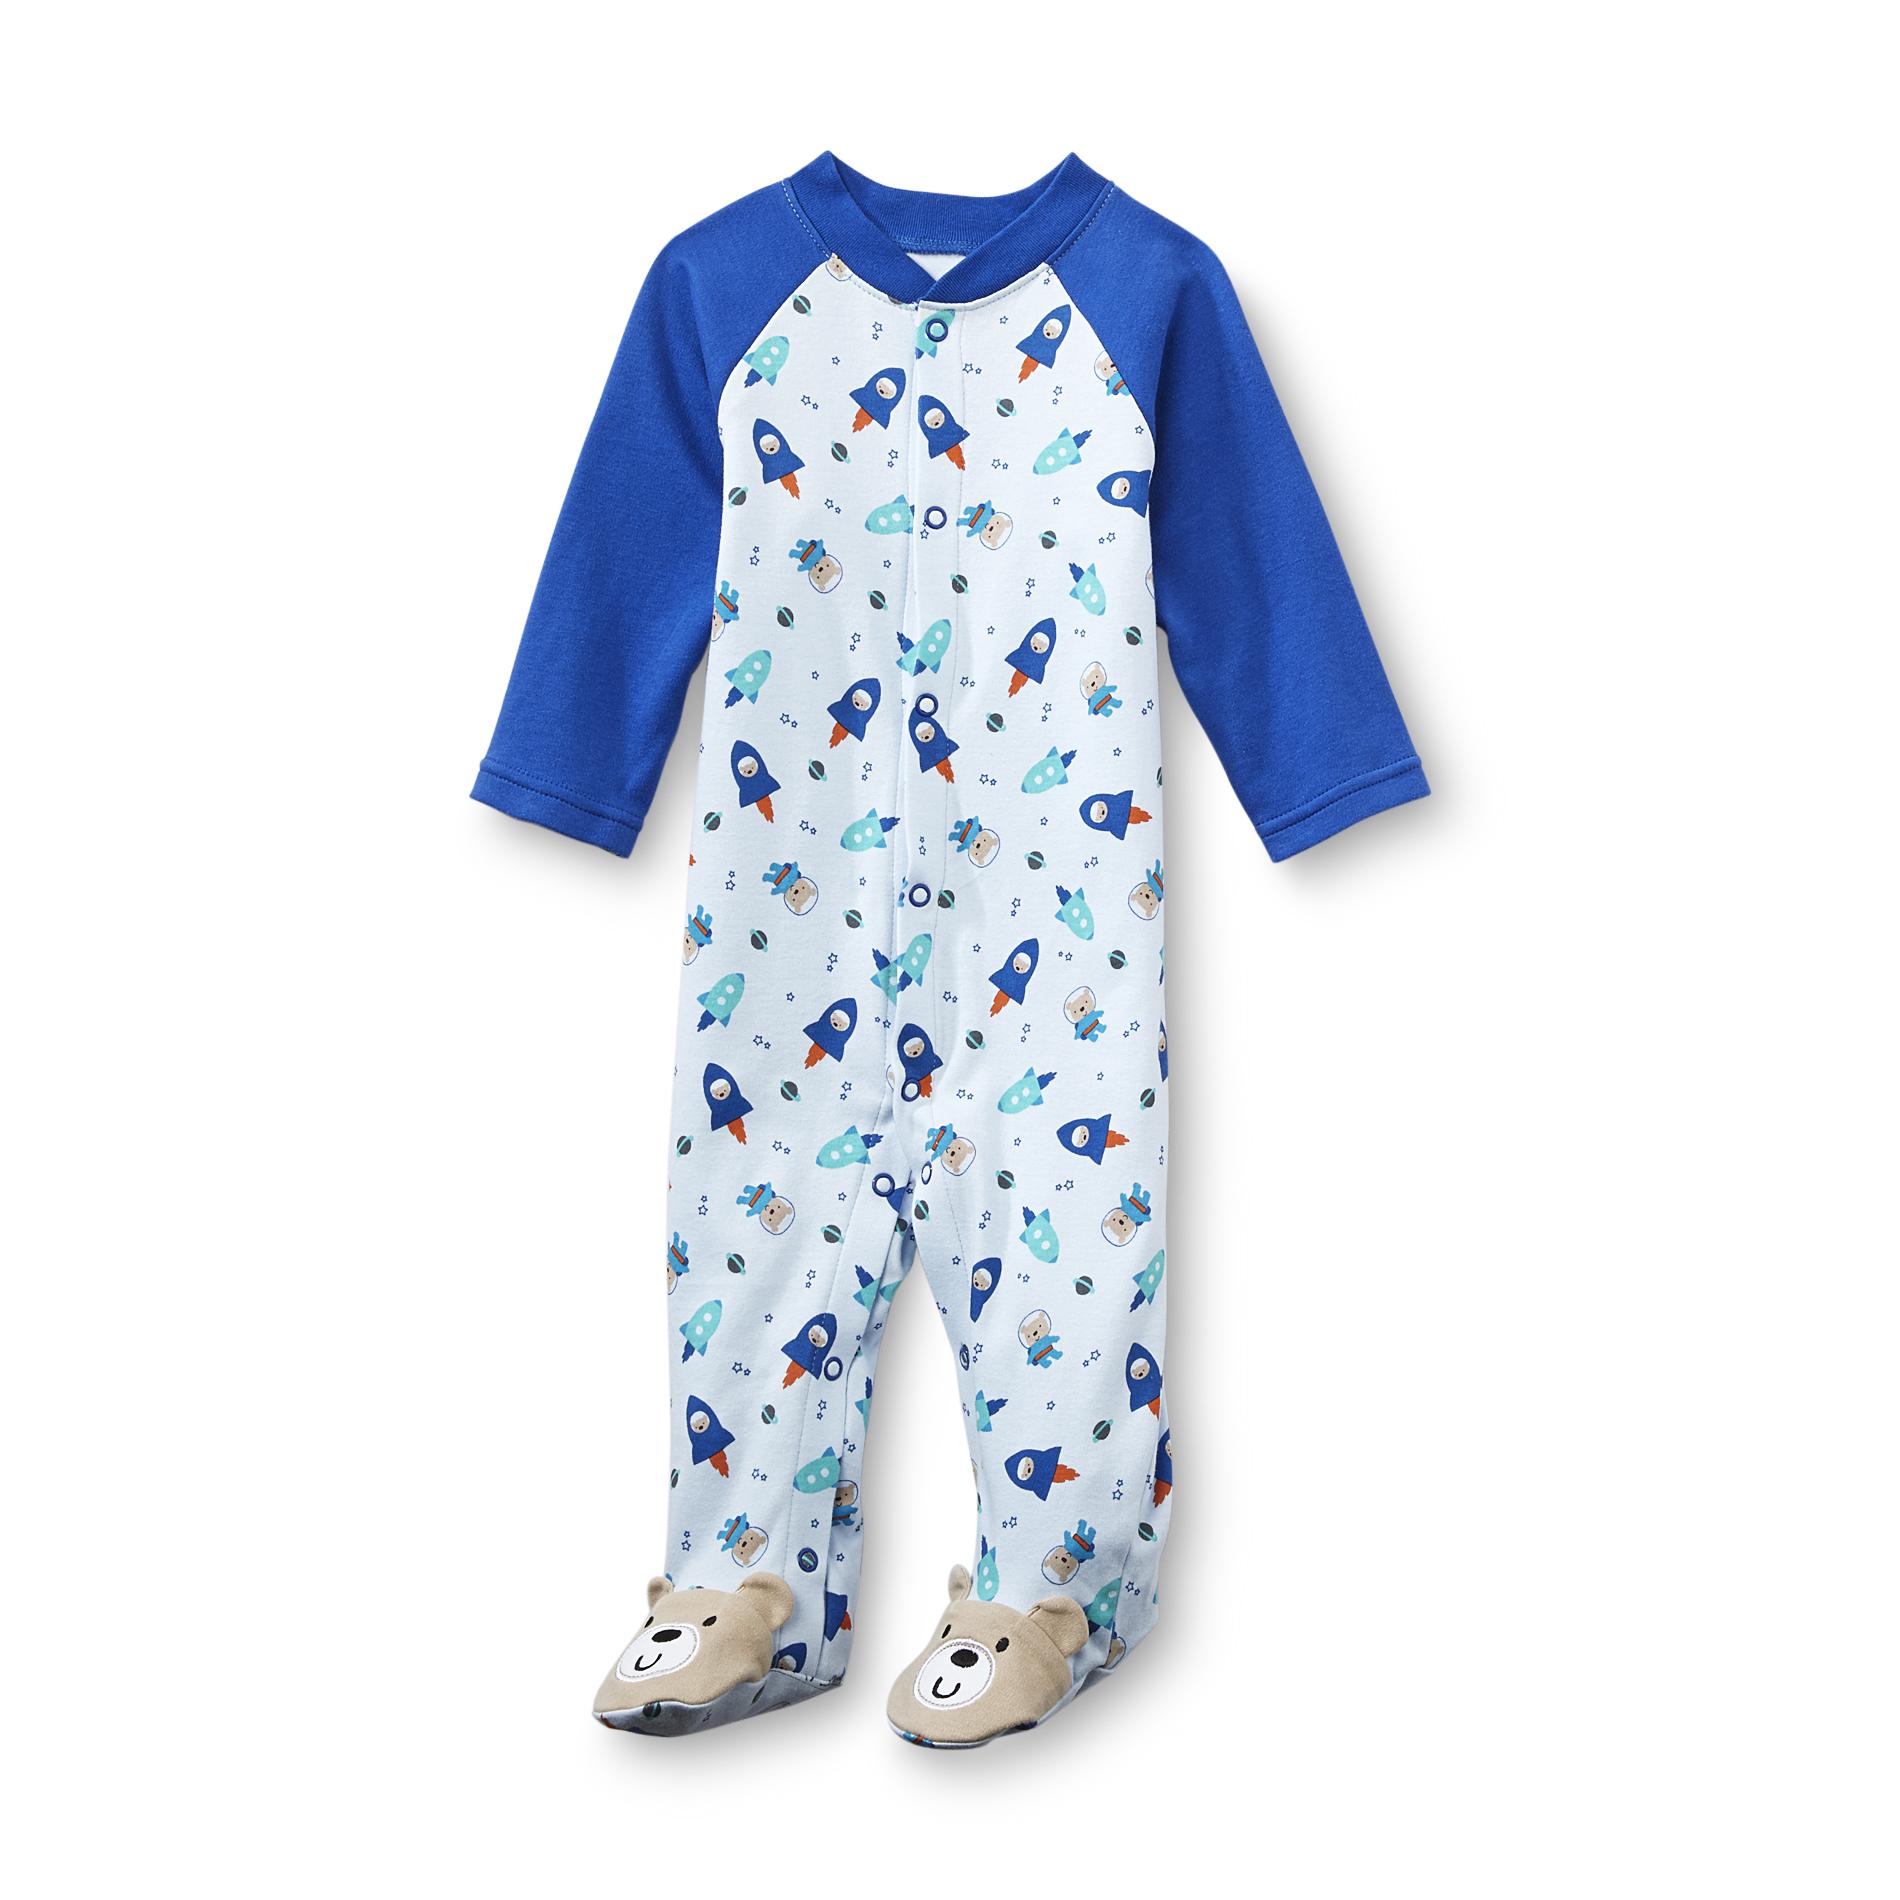 Little Wonders Newborn Boy's Sleeper Pajamas - Space Bears